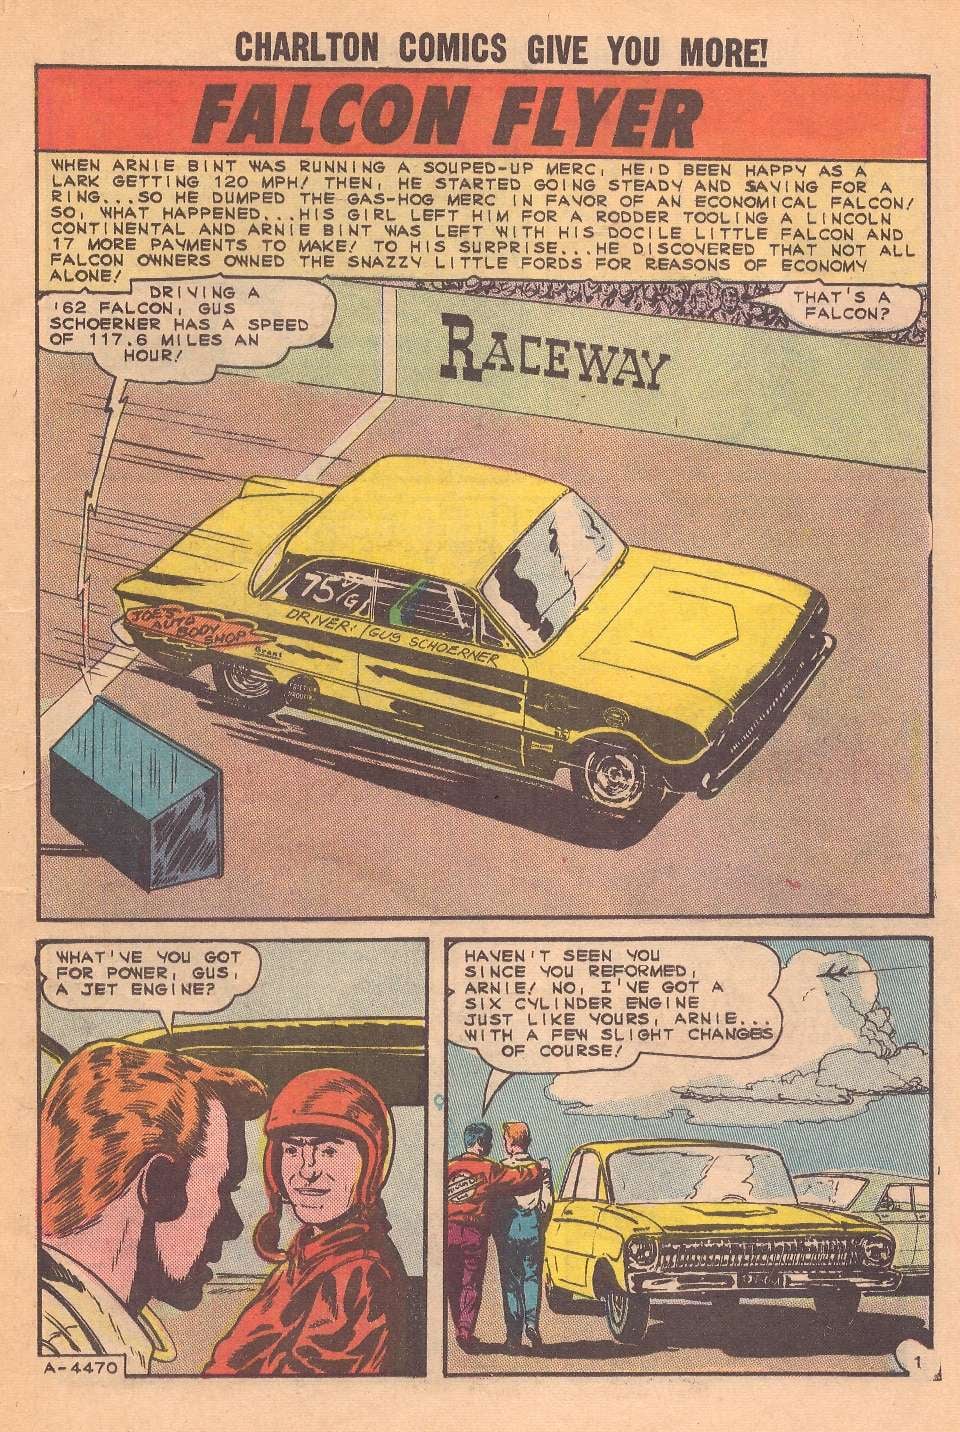 Drag-Strip Hotrodders - 60s Us Comics - January 1965 13204311